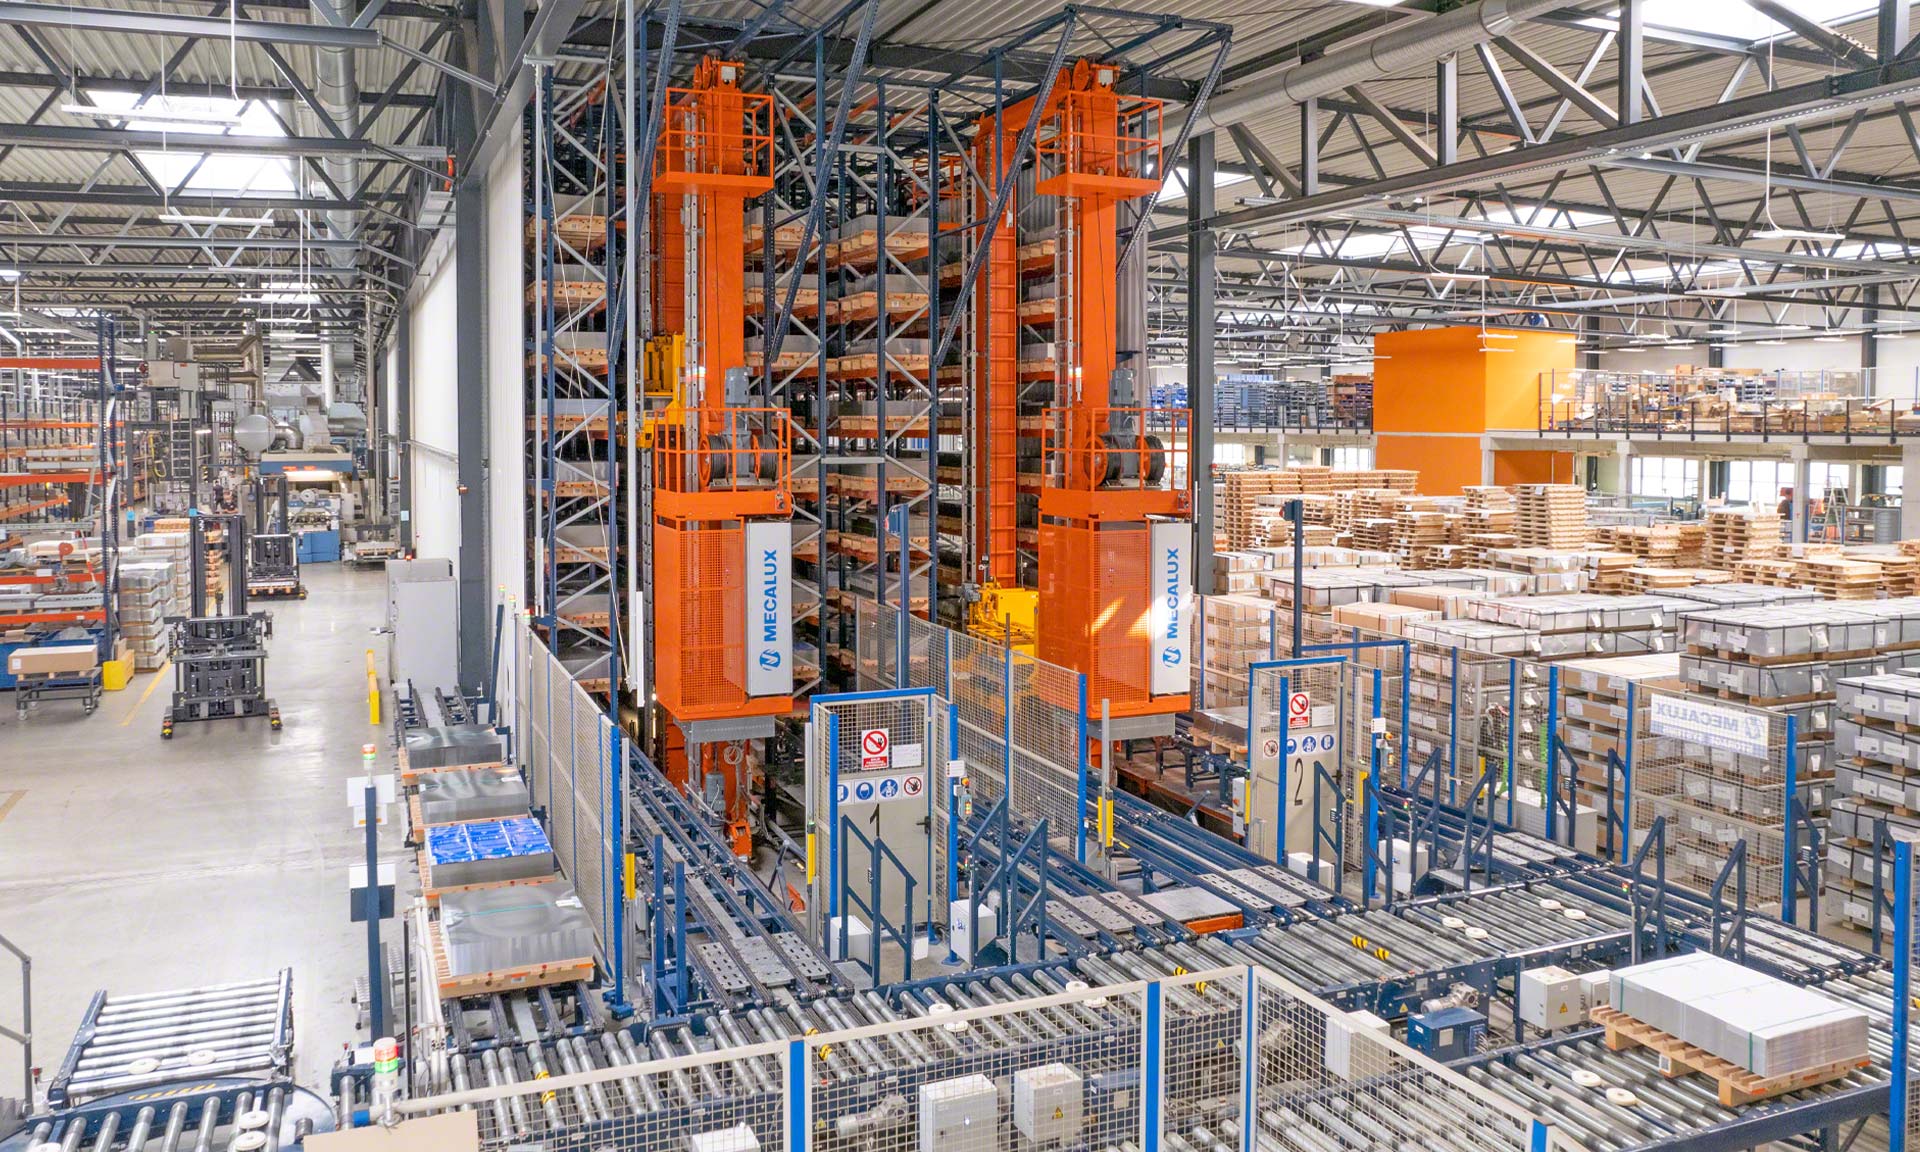 Blechwarenfabrik: Europe's most modern metal packaging plant